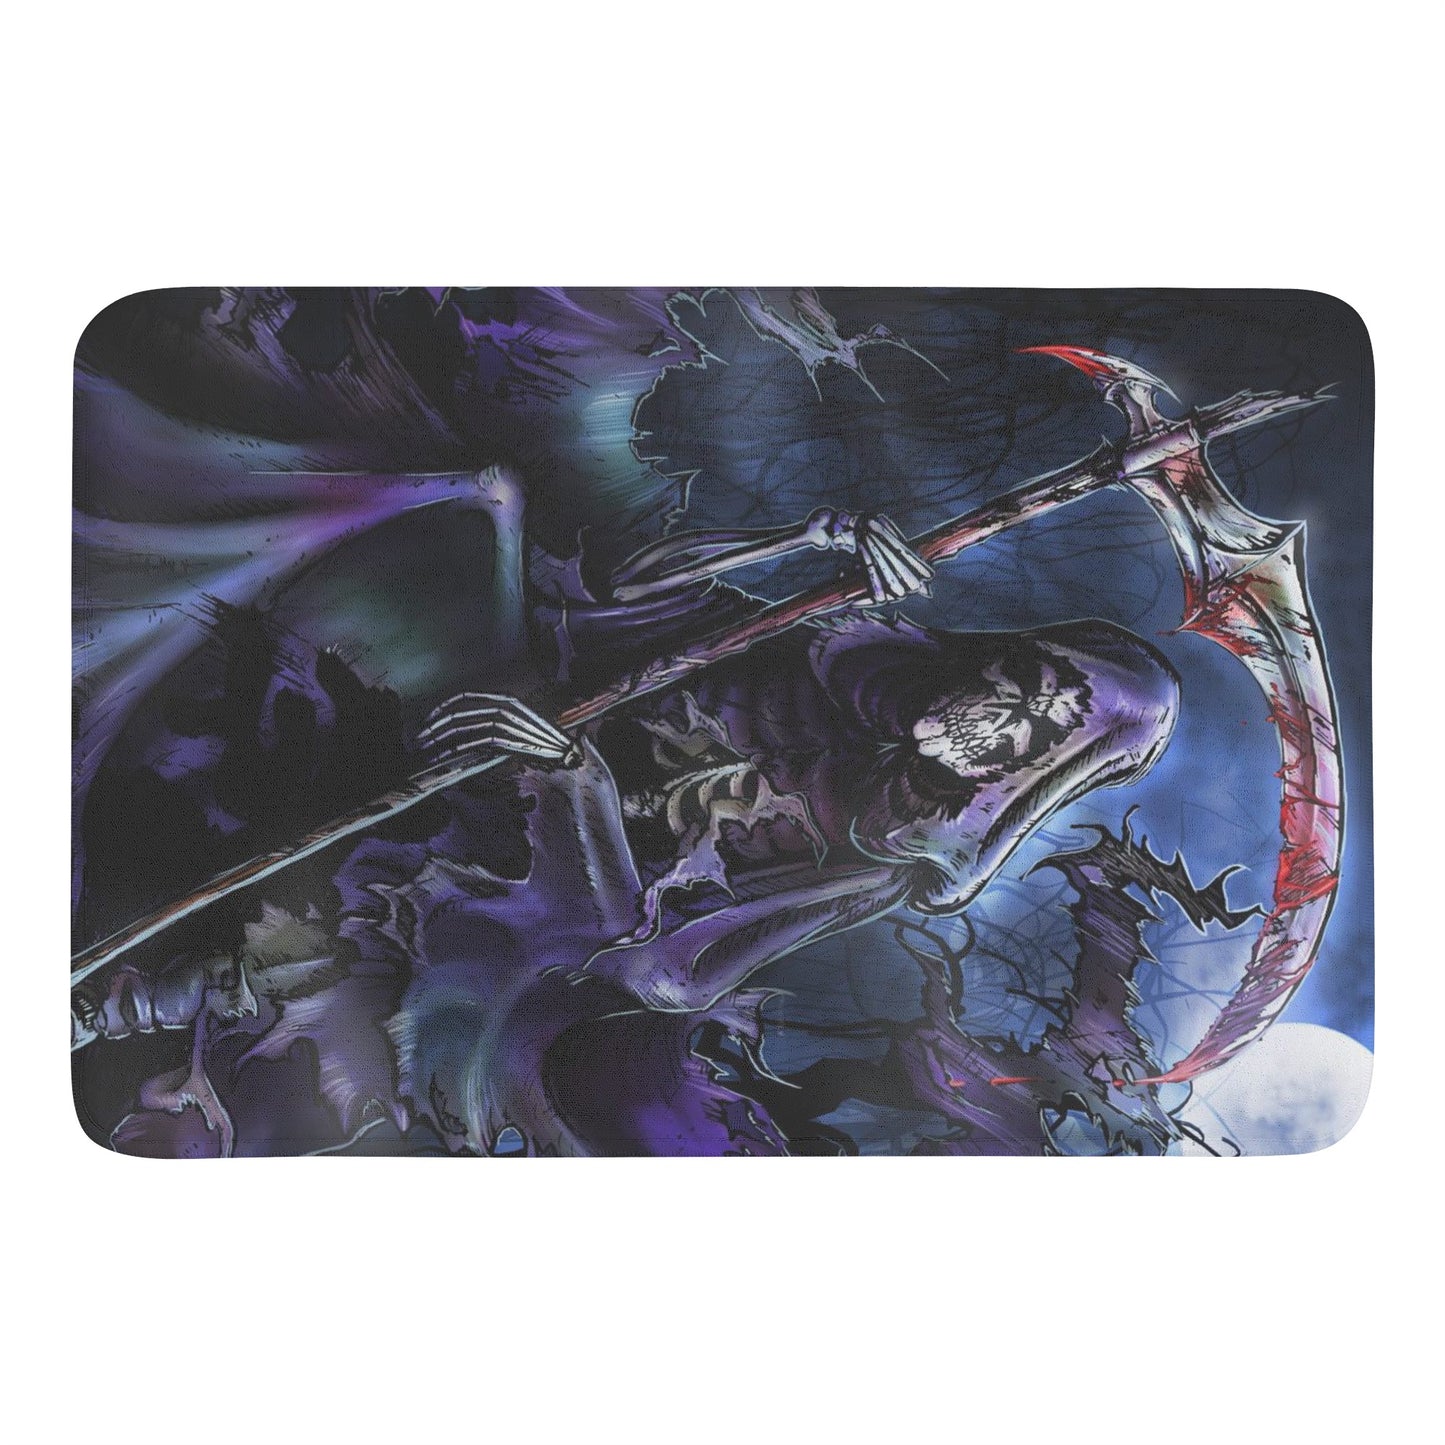 Grim reaper blood Plush Doormat